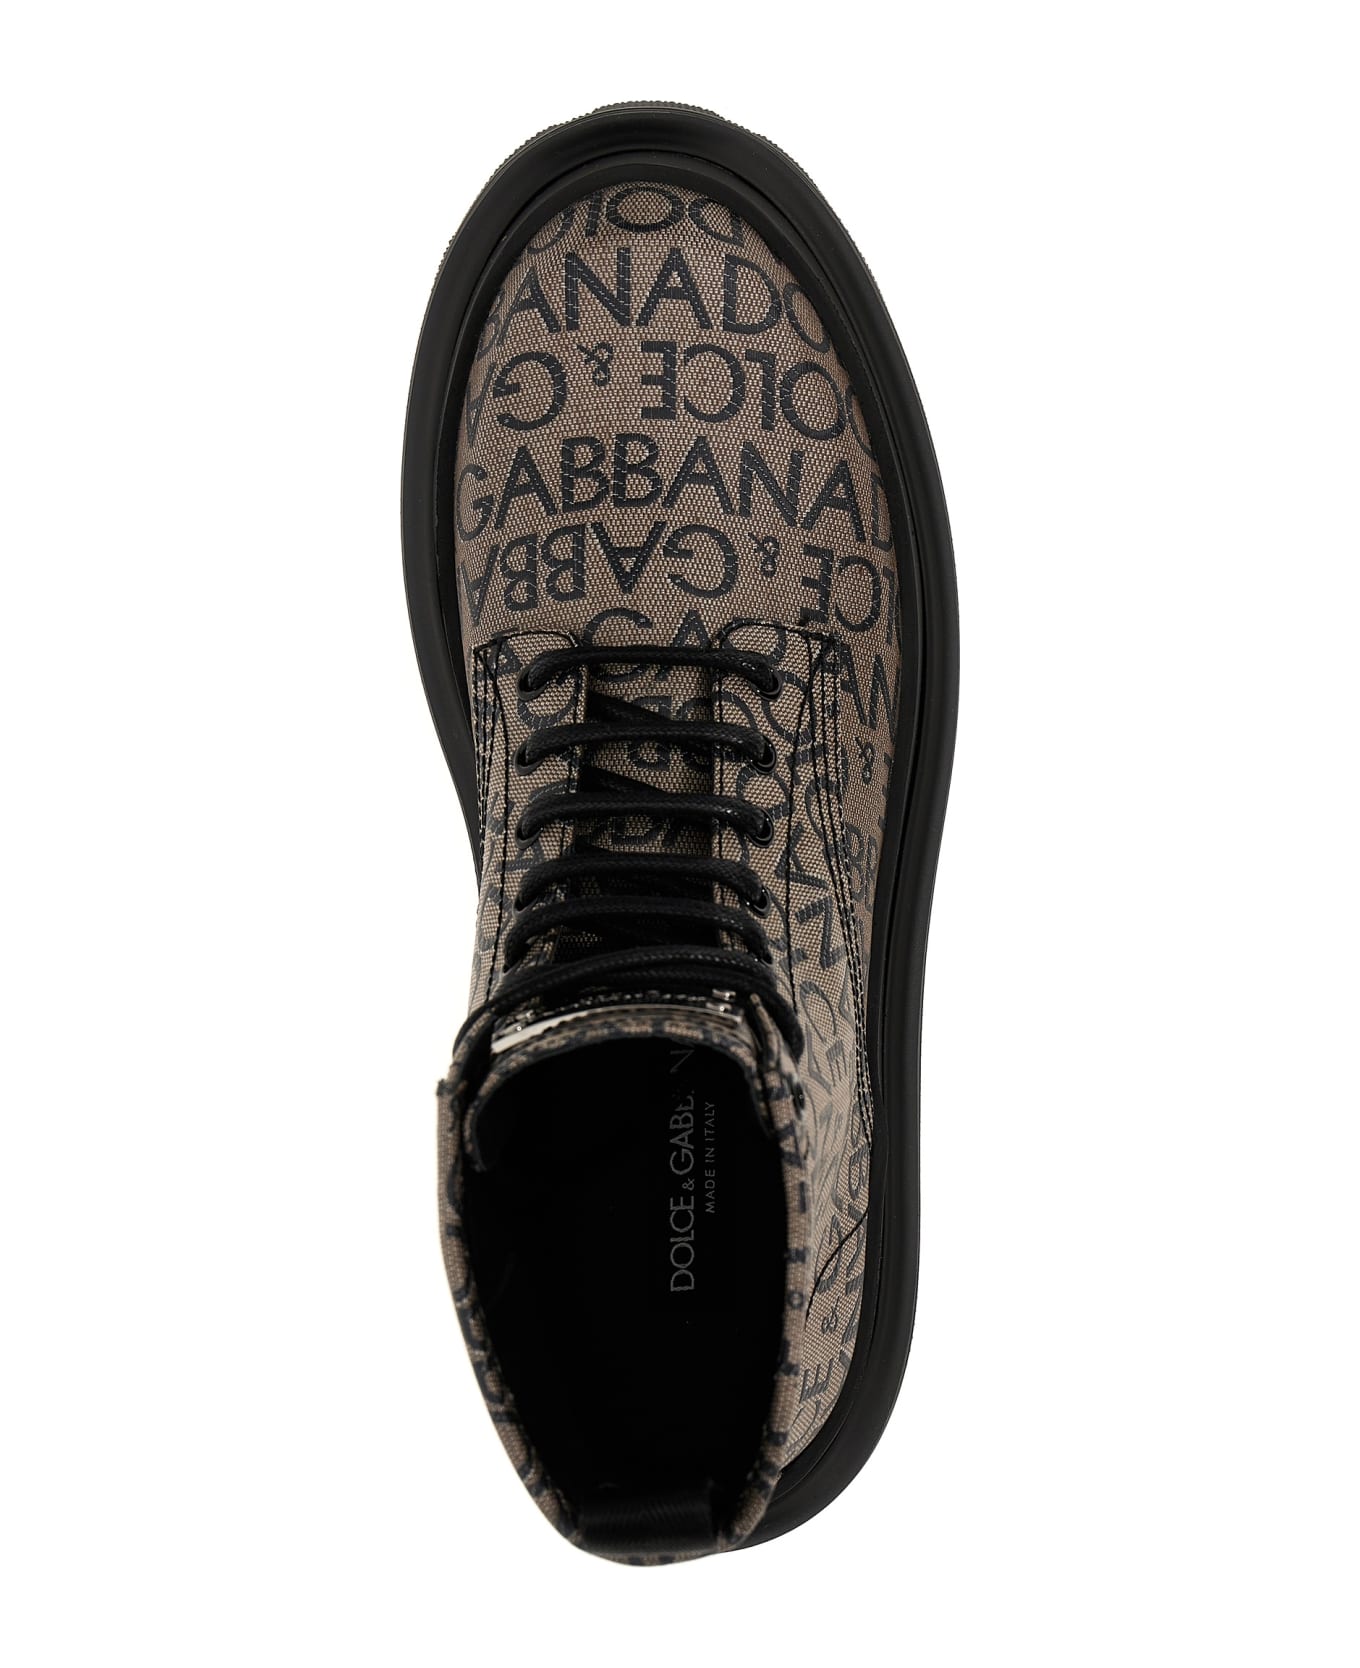 Dolce & Gabbana Jacquard Logo Combat Boots - Brown / Black ブーツ